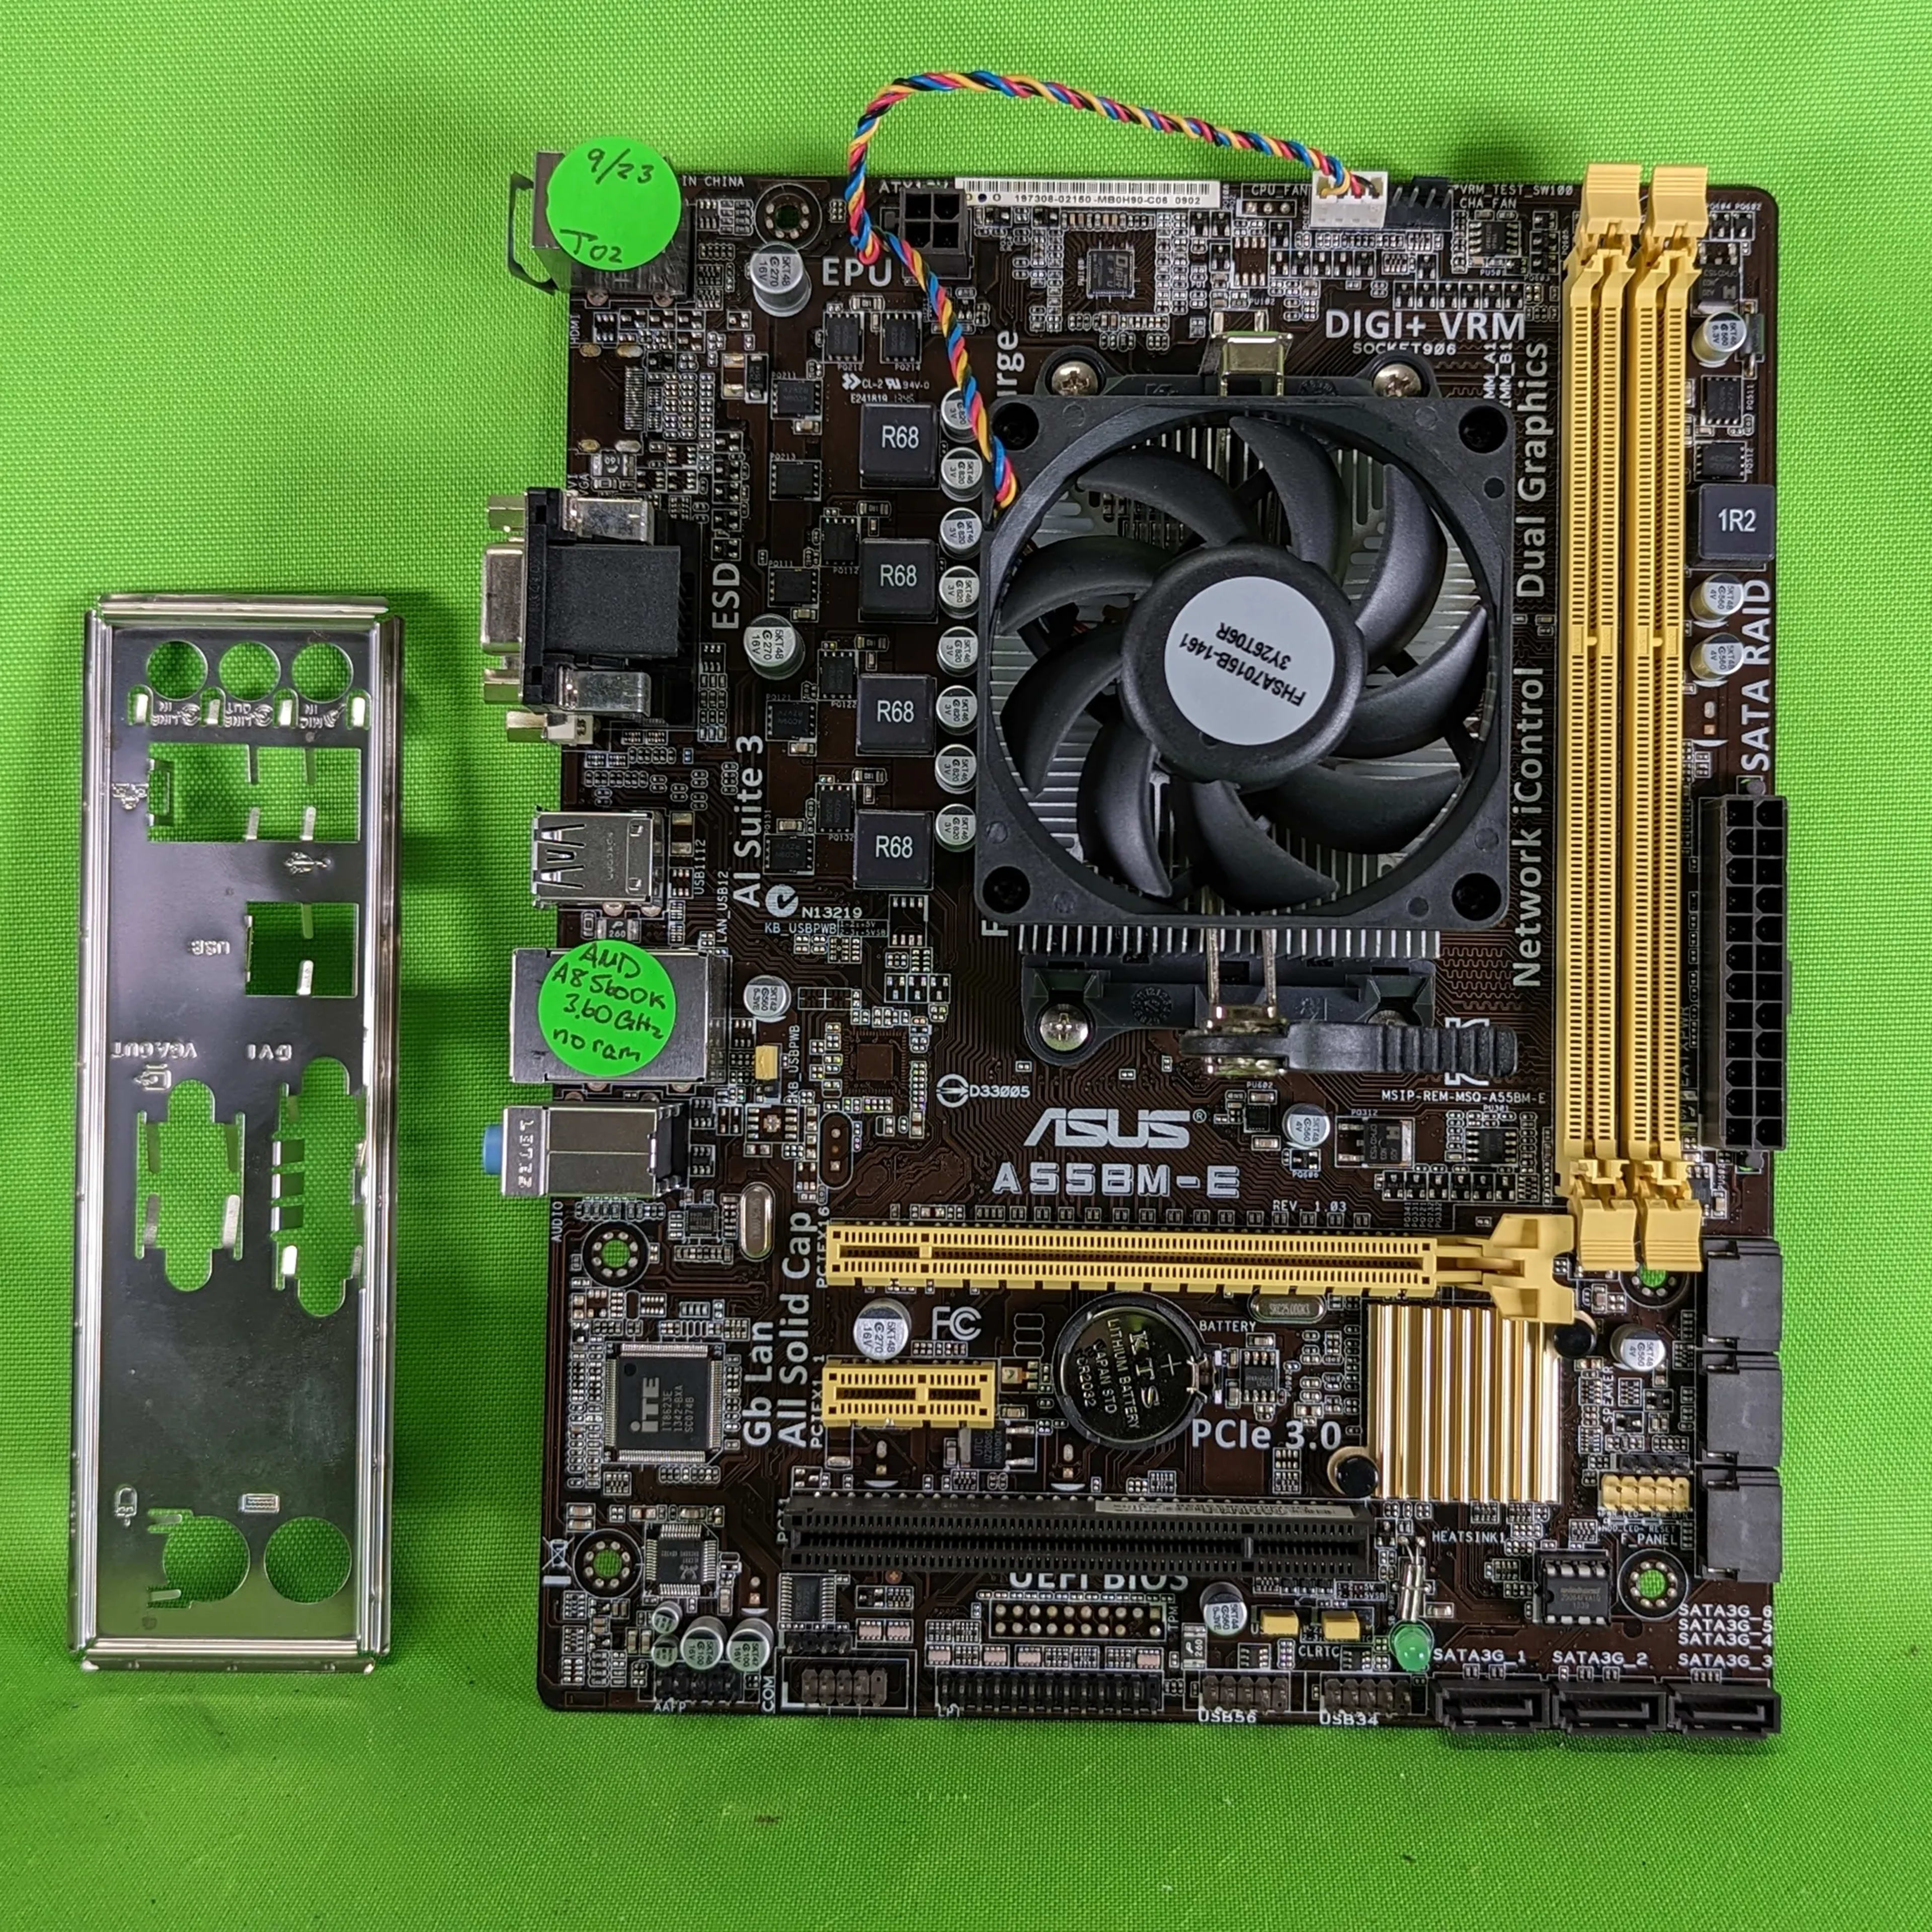 A8-5600K + Asus A55BM-E Motherboard + CPU Cooler + IO shield Combo